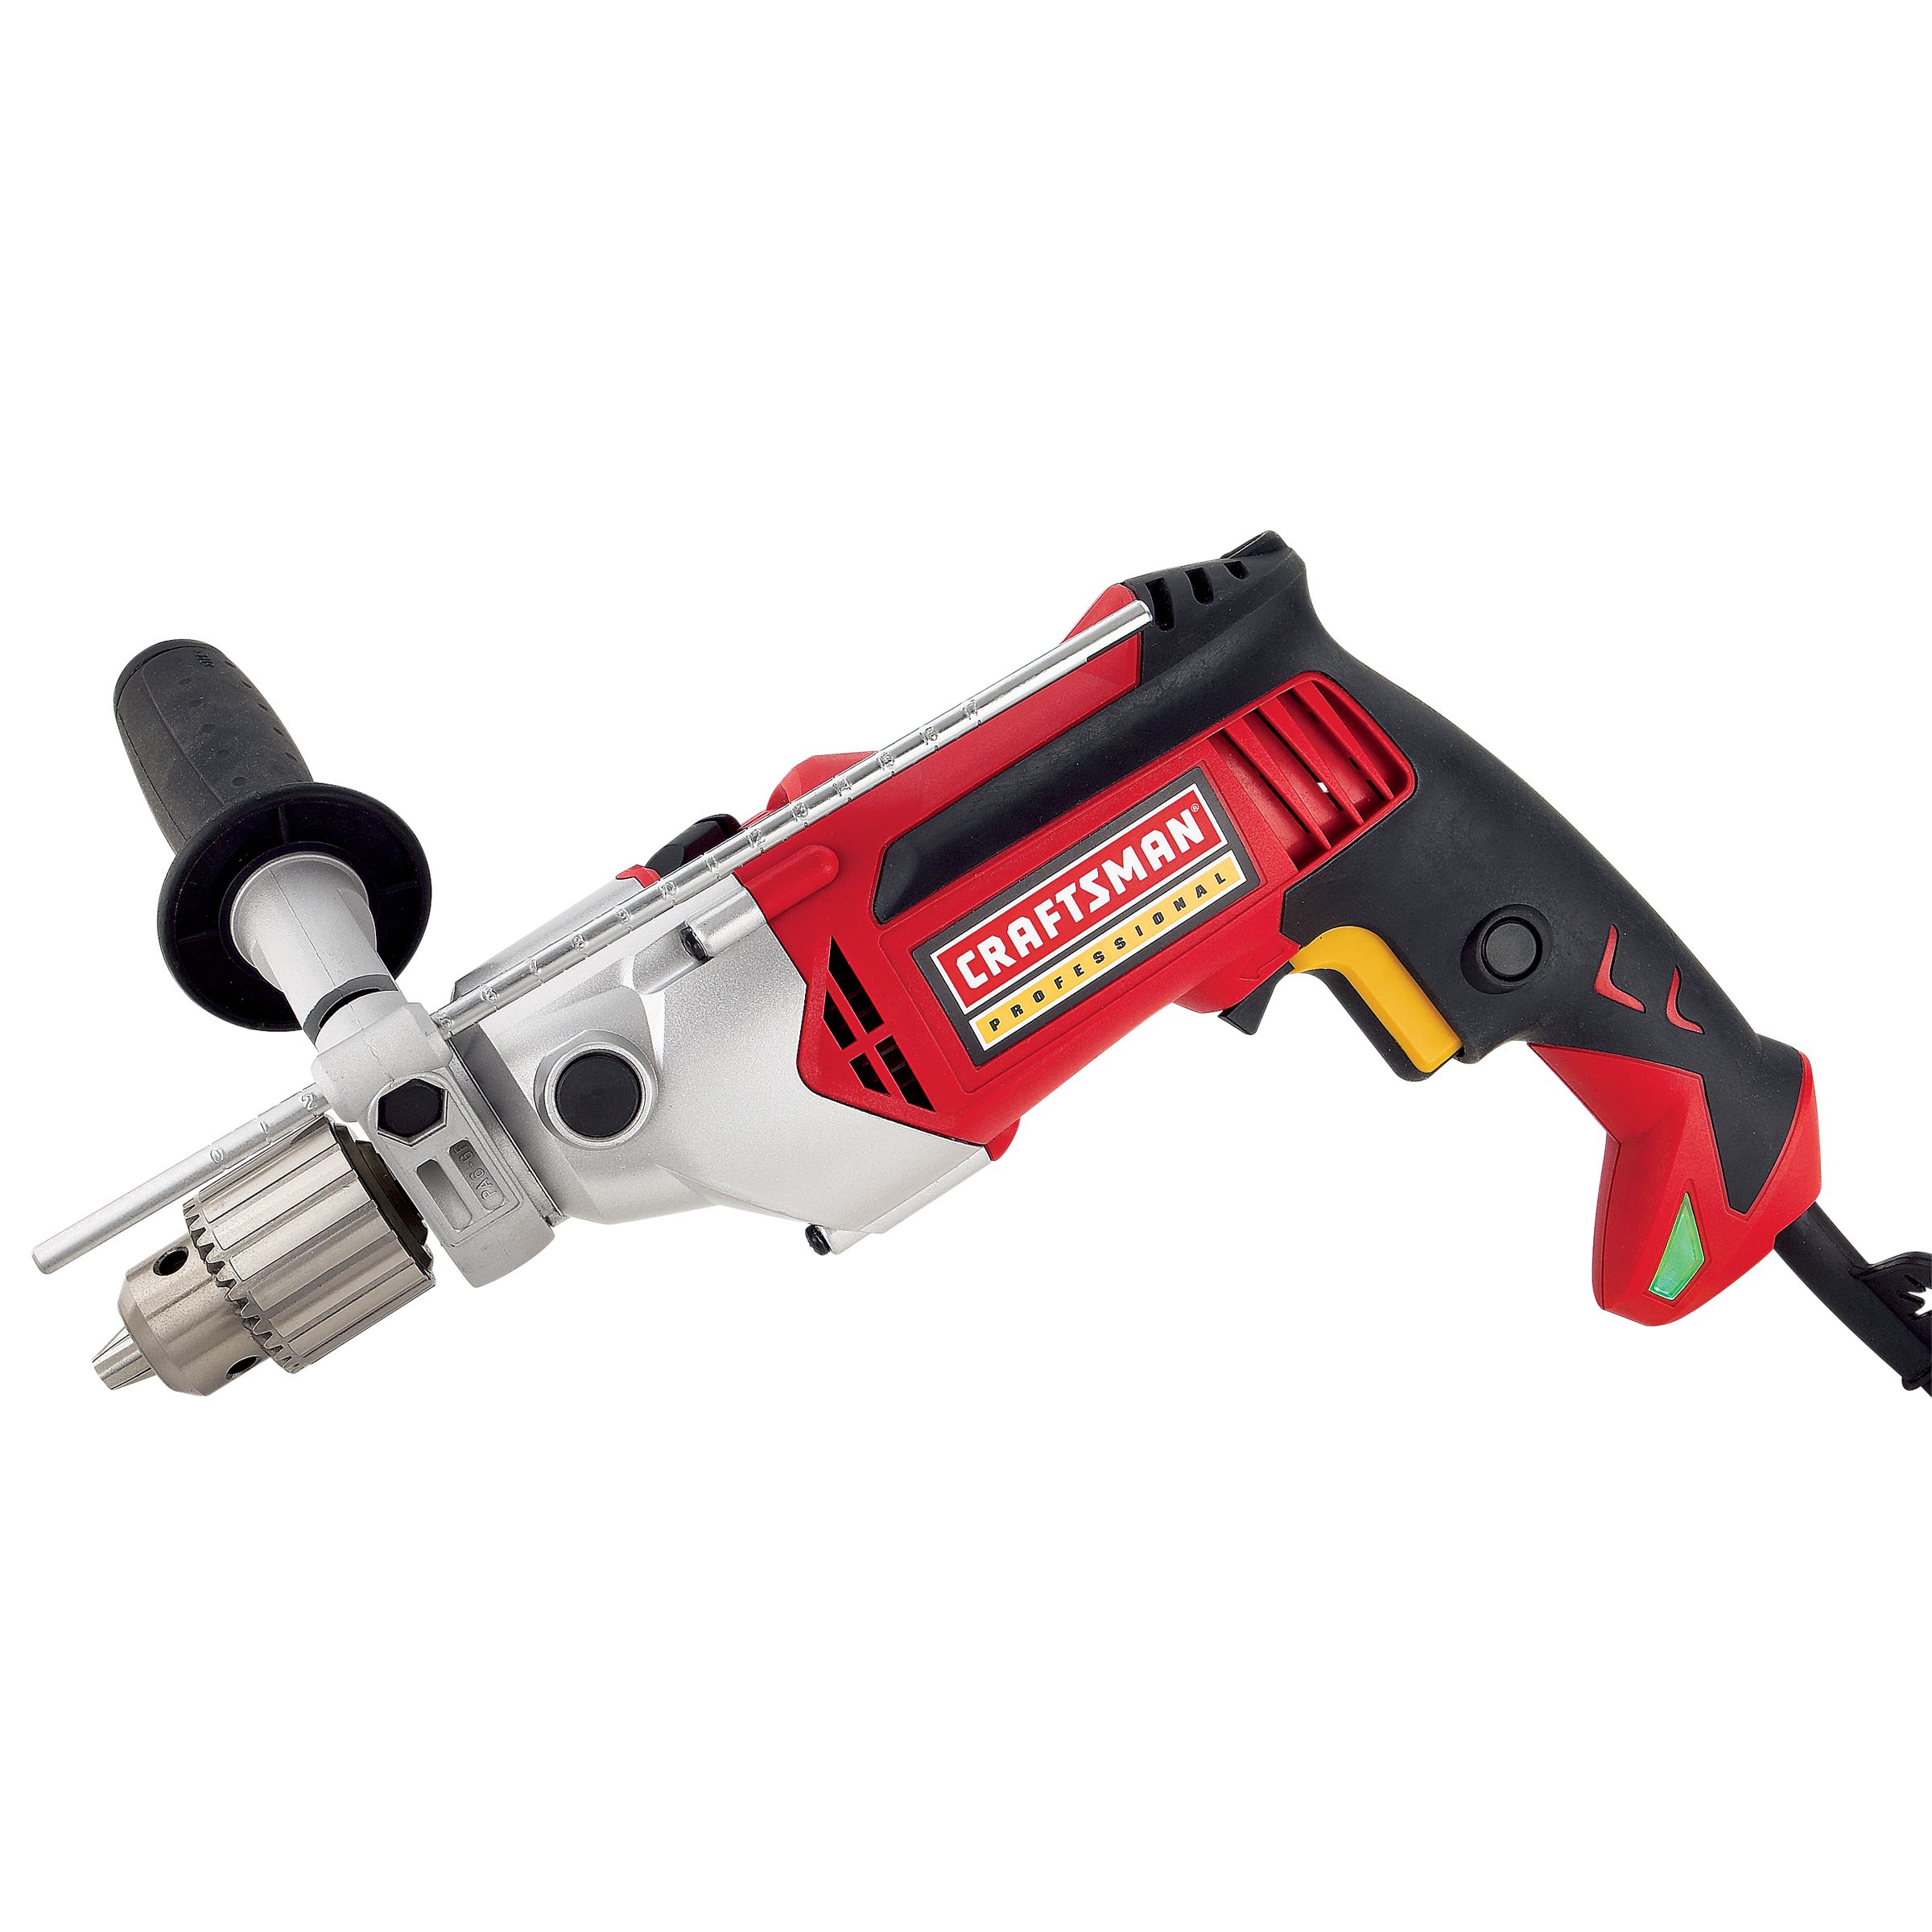 Craftsman Professional 28129 8.0 amp Corded 1/2" Hammer Drill | Shop